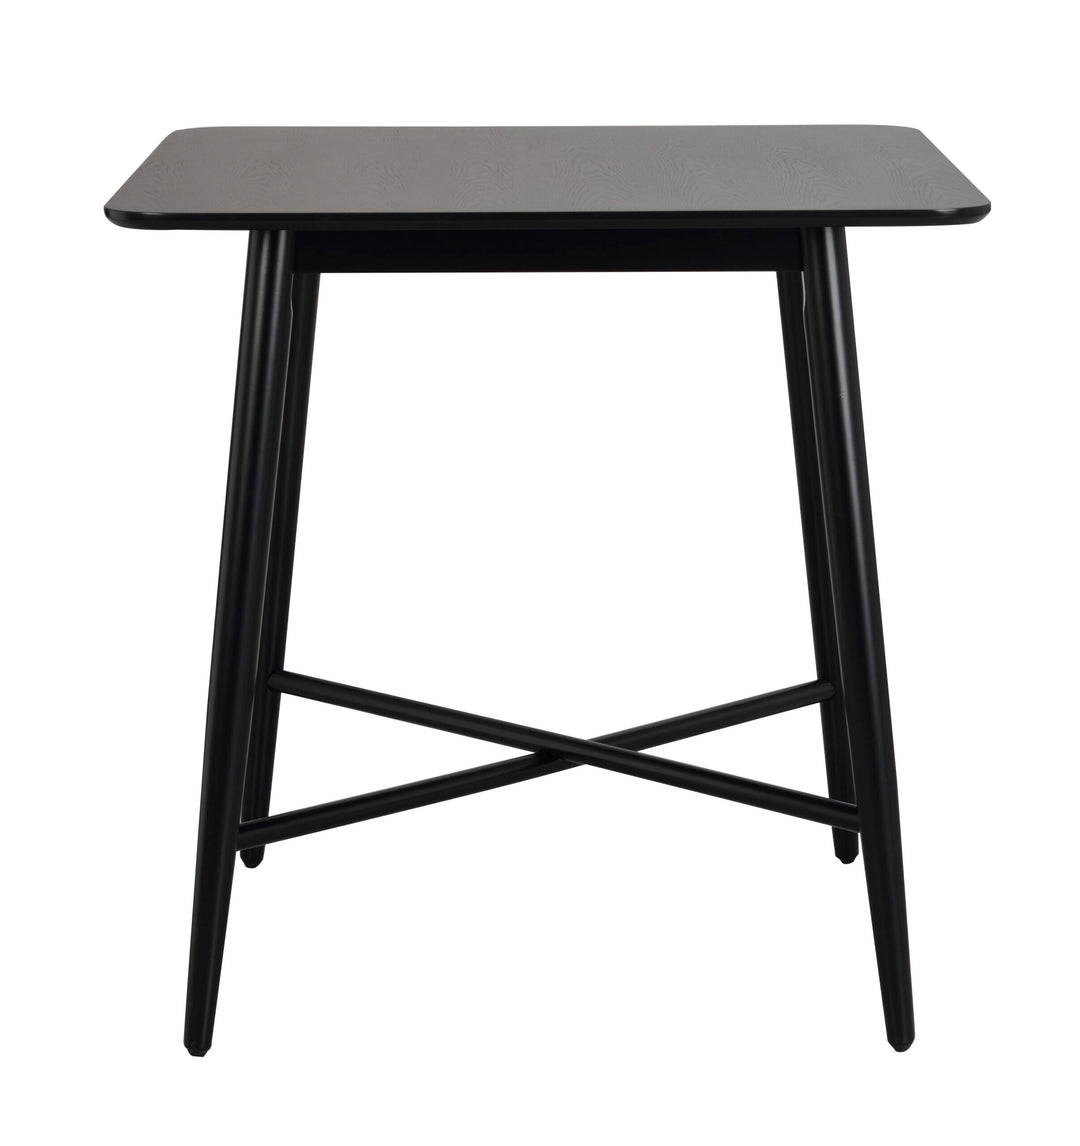 110710_a, Lotta bar table, black